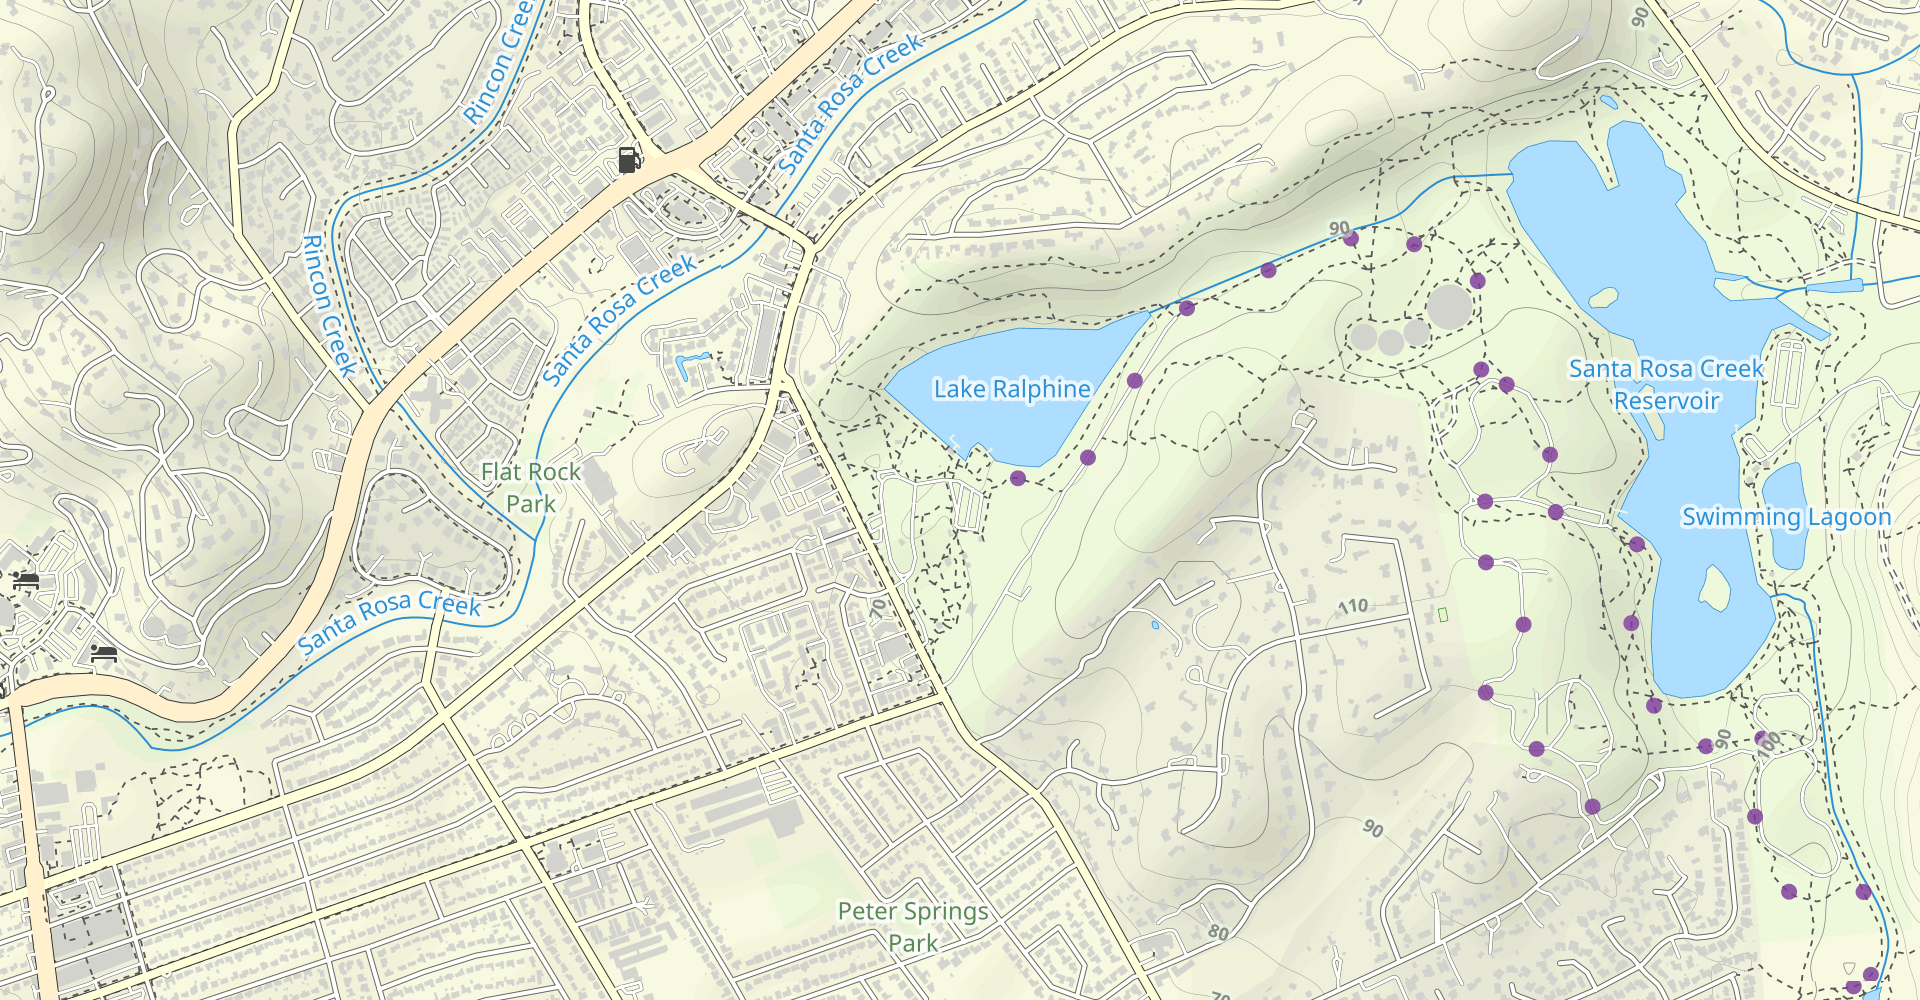 Lake Ralphine Loop via Sullivan Ridge and Spring Lake Trail